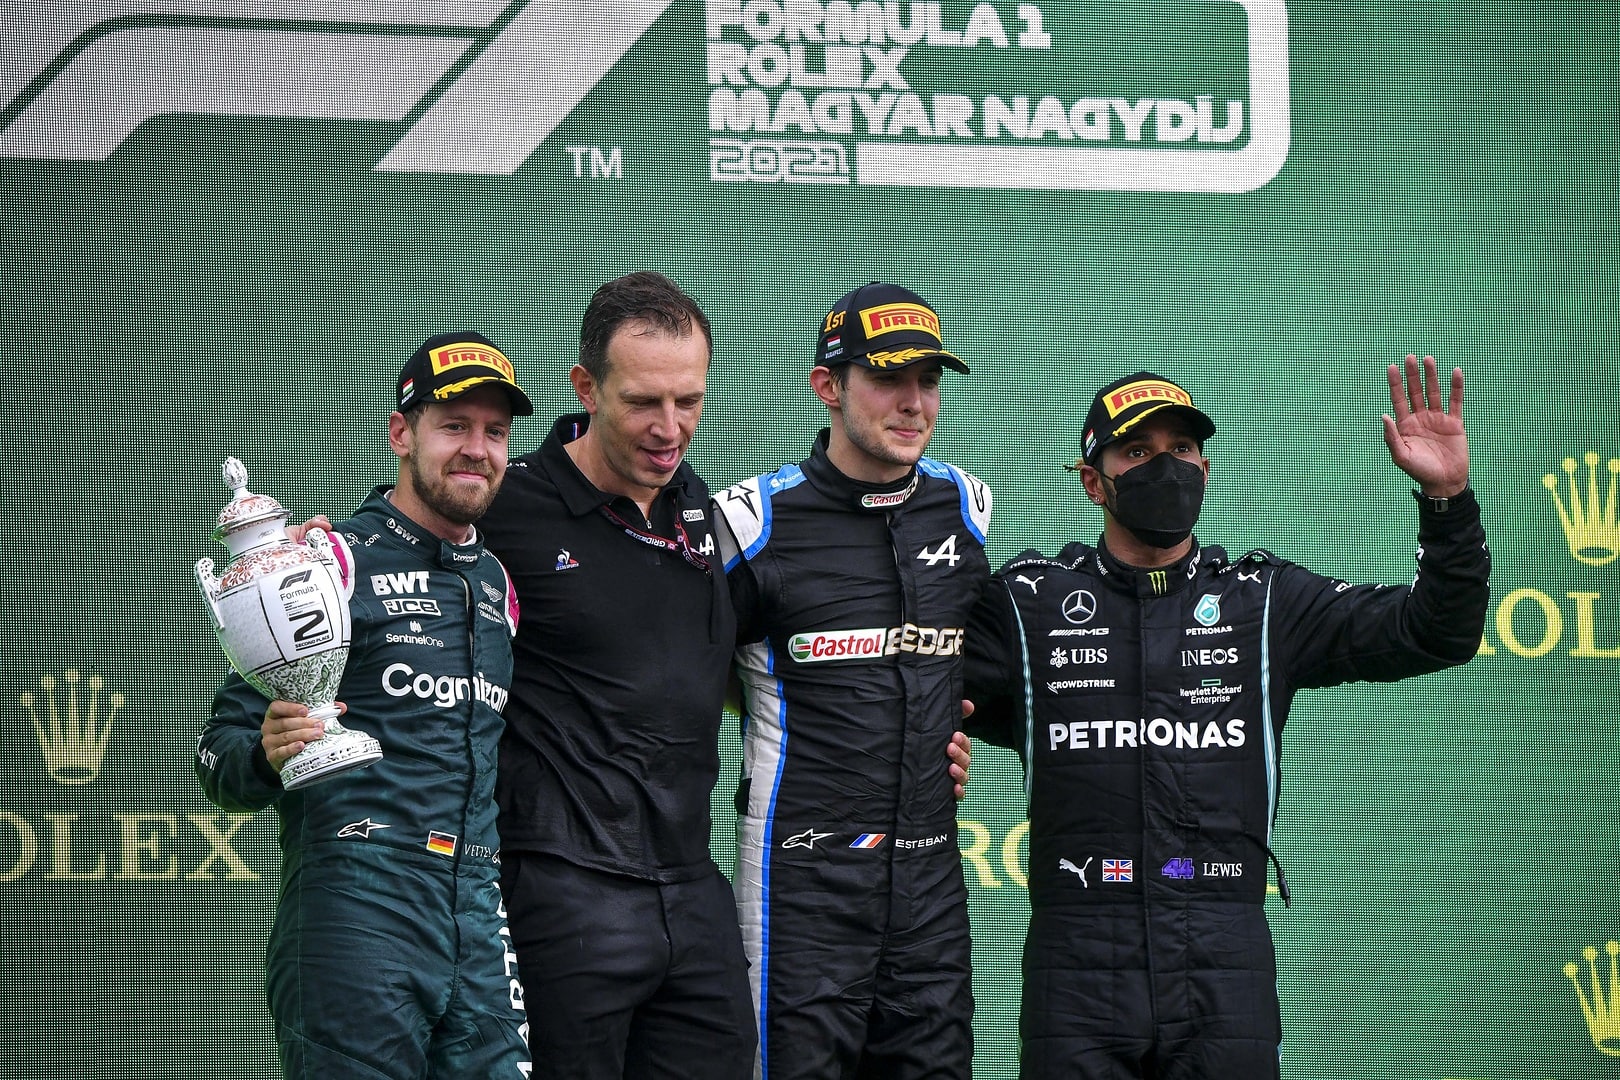 2021 Hungarian Grand Prix, Sunday - Sebastian Vettel, Esteban Ocon, and Lewis Hamilton on the podium (image courtesy Mercedes-AMG Petronas)